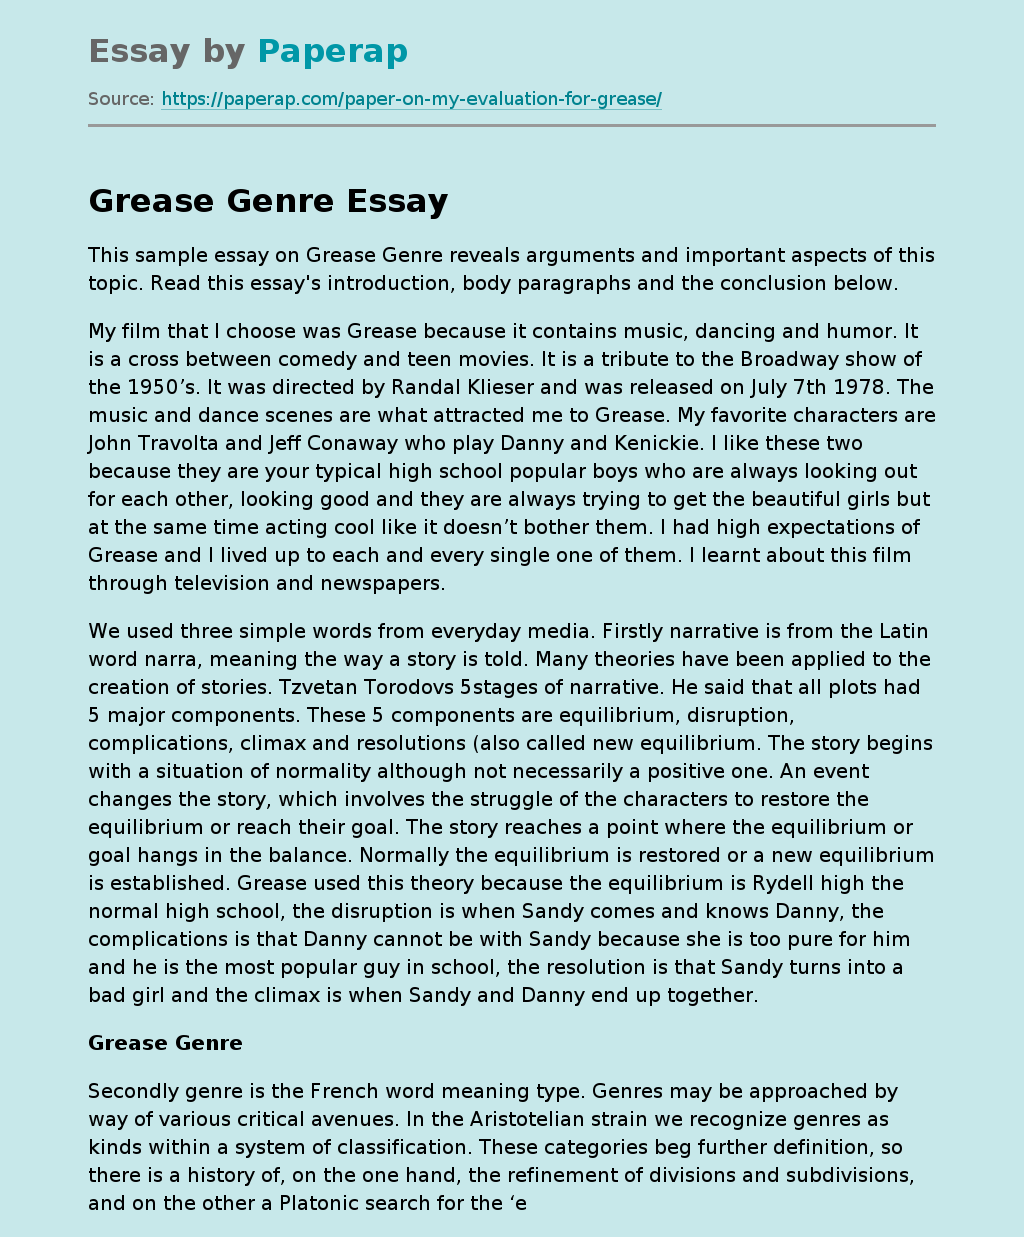 Grease Genre Analysis